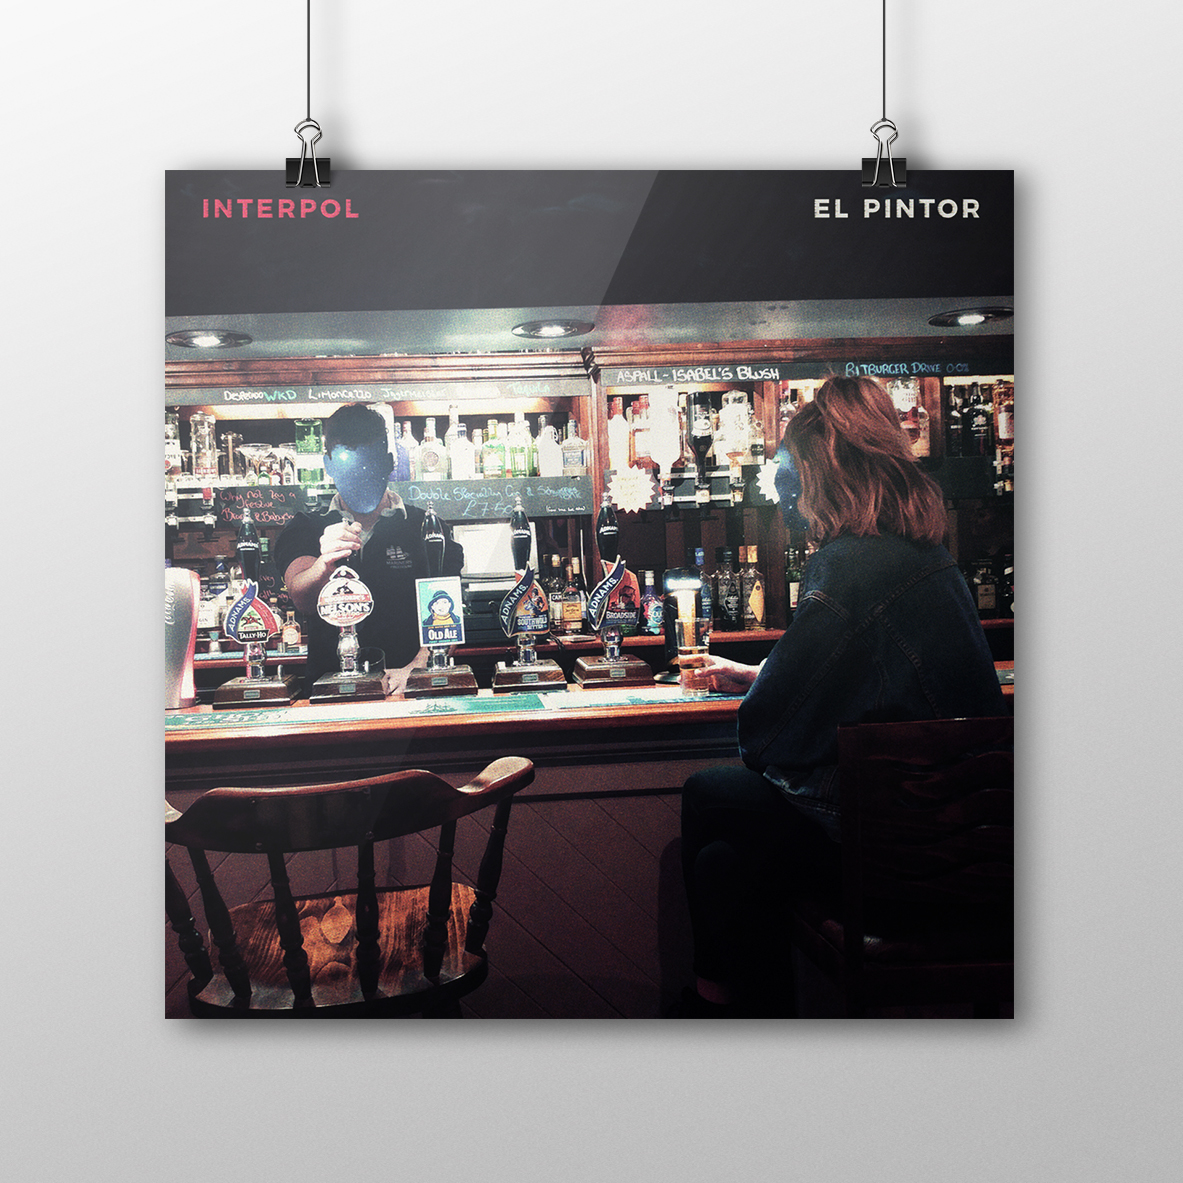 interpol Pintor Album cover vinyl cd Space  surreal bar felixstowe